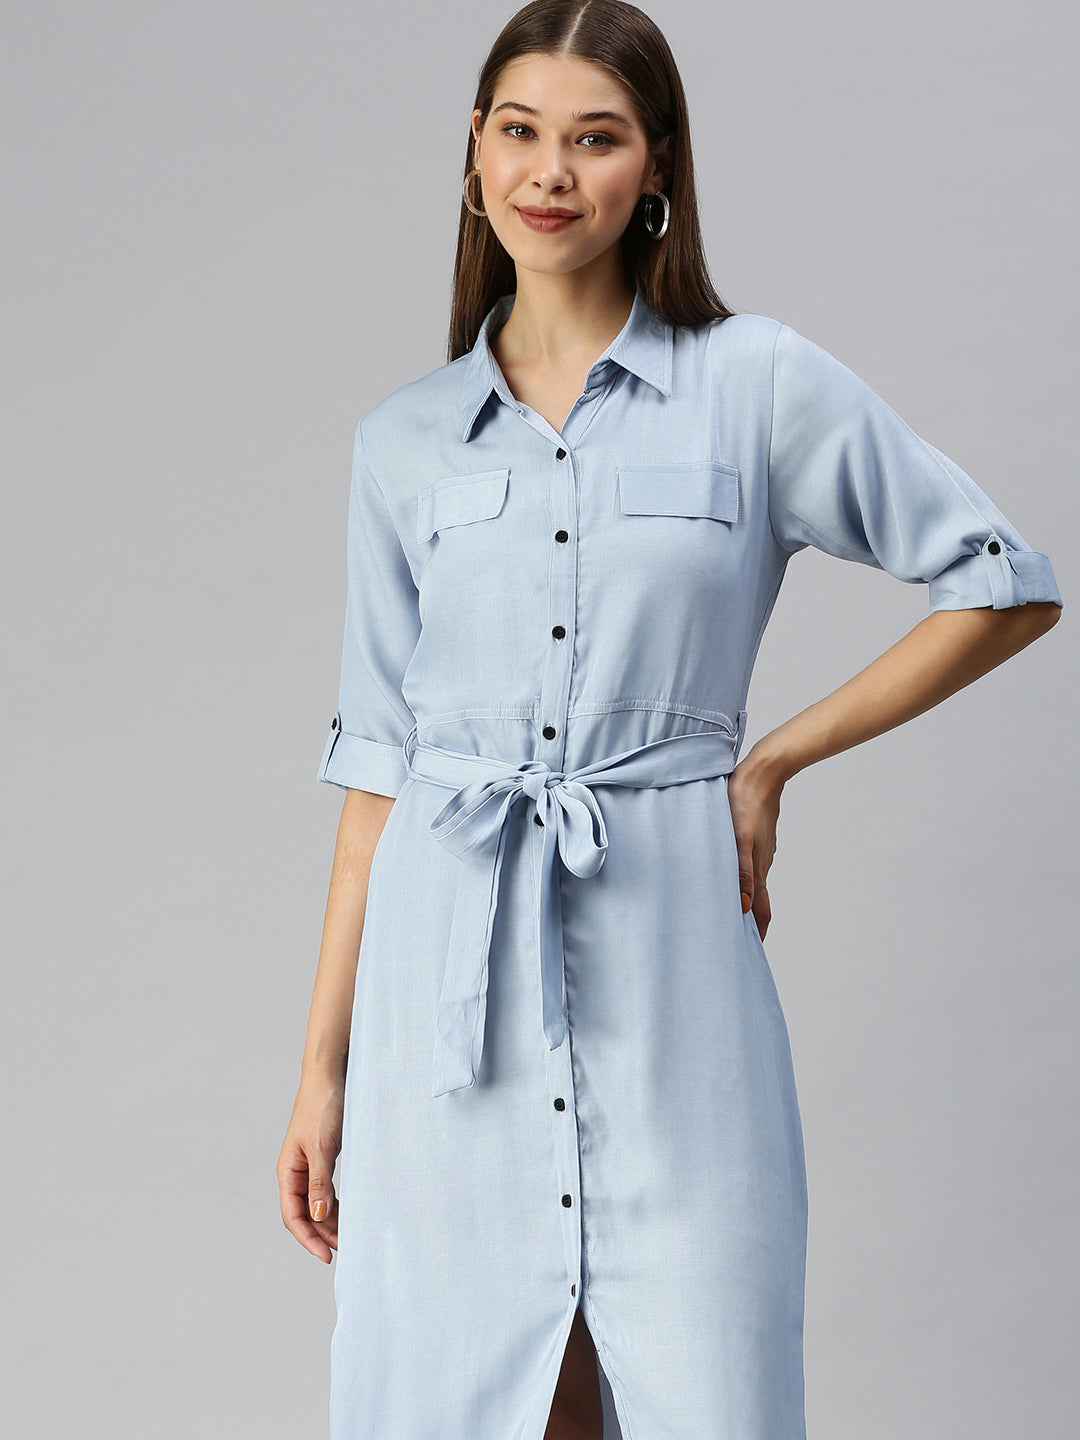 Women Solid Shirt Style Blue Dress